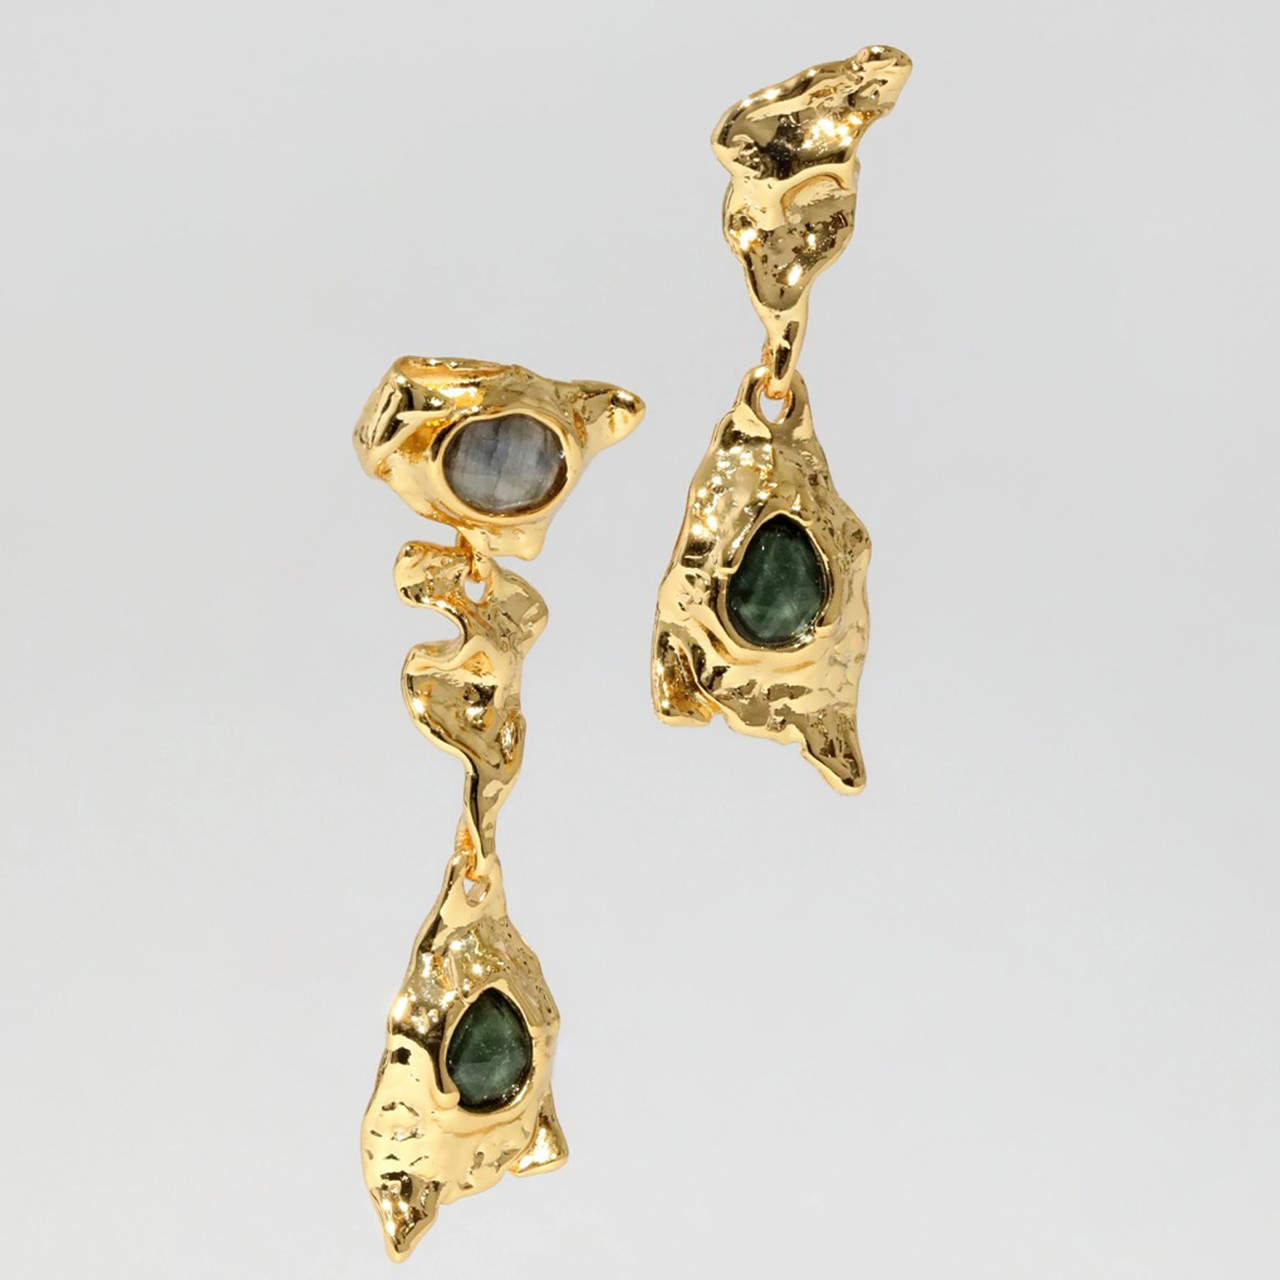 Brut Gold Asymmetrical Post Earrings, Alexis Bittar, tomfoolery